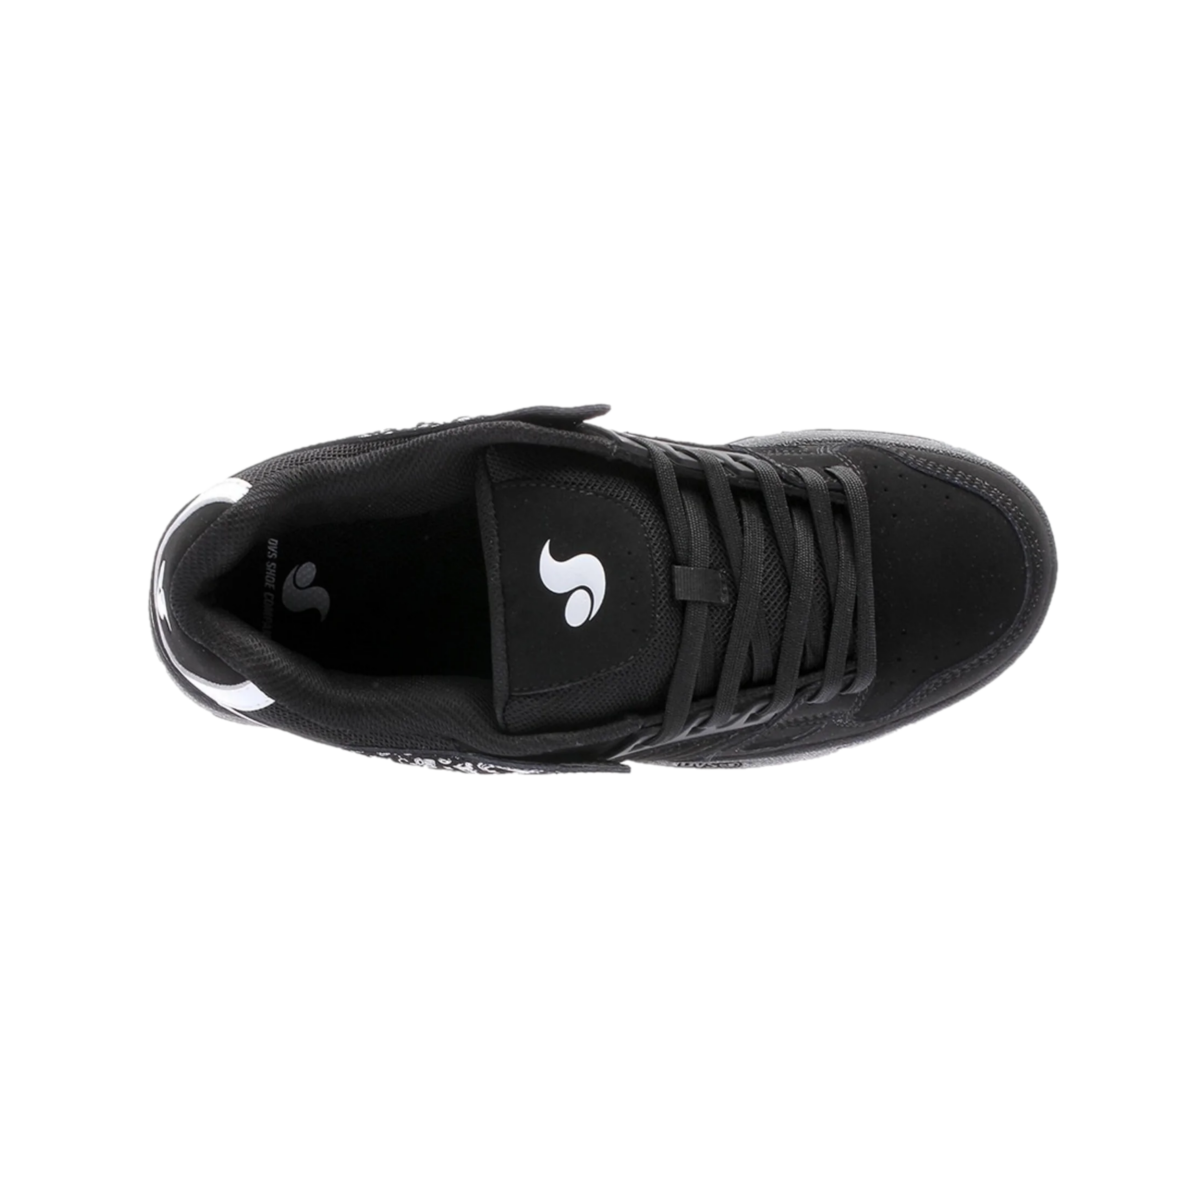 DVS F0000233971 CELSIUS MN'S (Medium) Black/White/Black Suede/Leather/Nubuck Skate Shoes